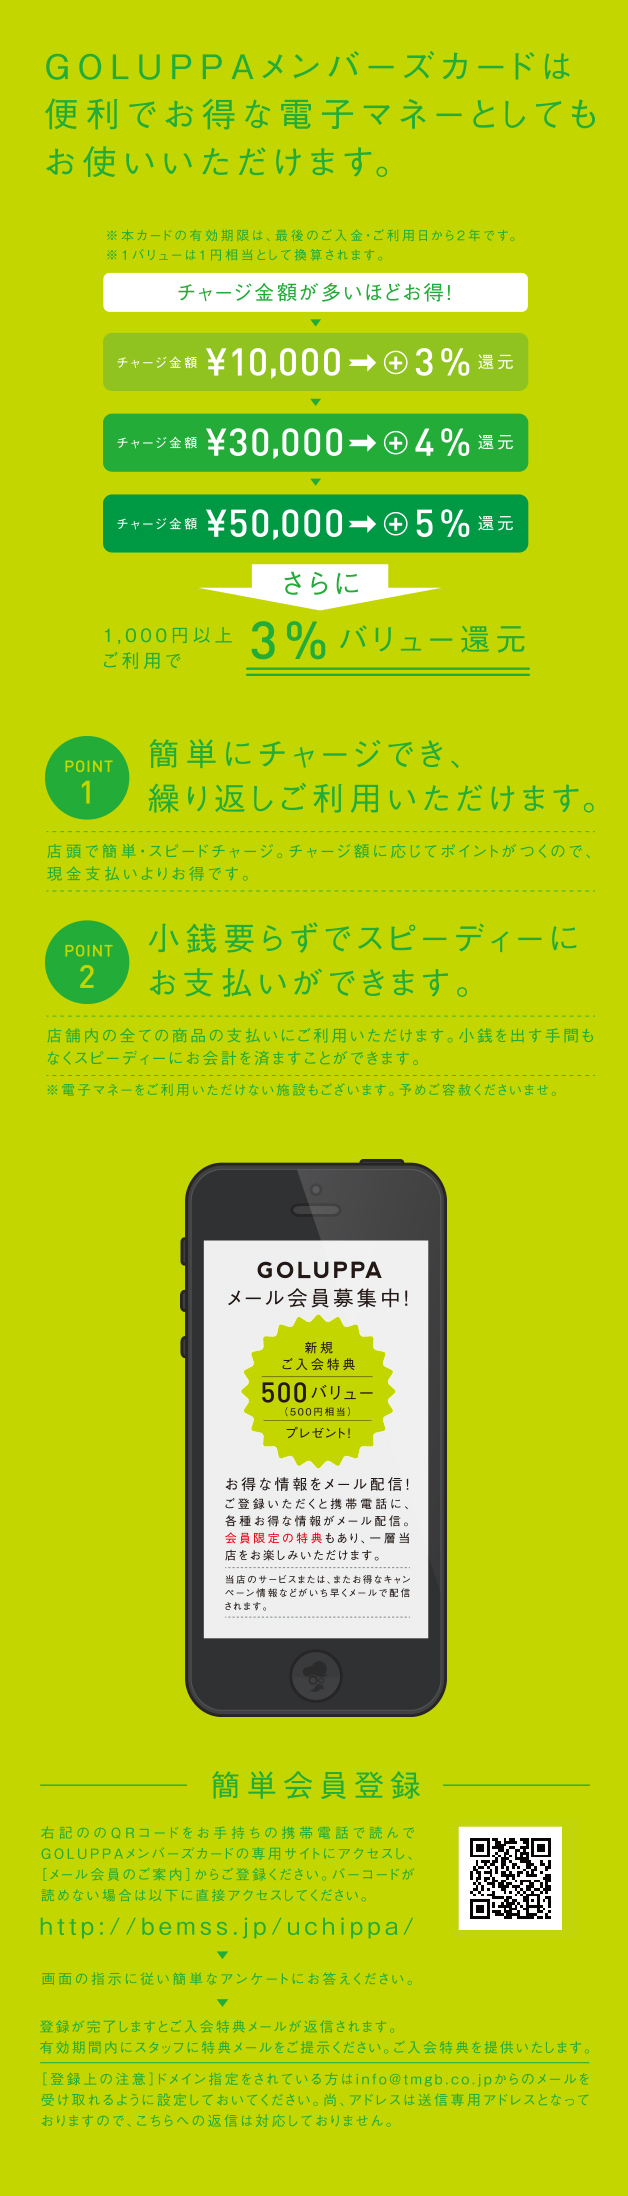 GOLUPPAメンバーズカードは便利でお得な電子マネーとしてもお使いいただけます。